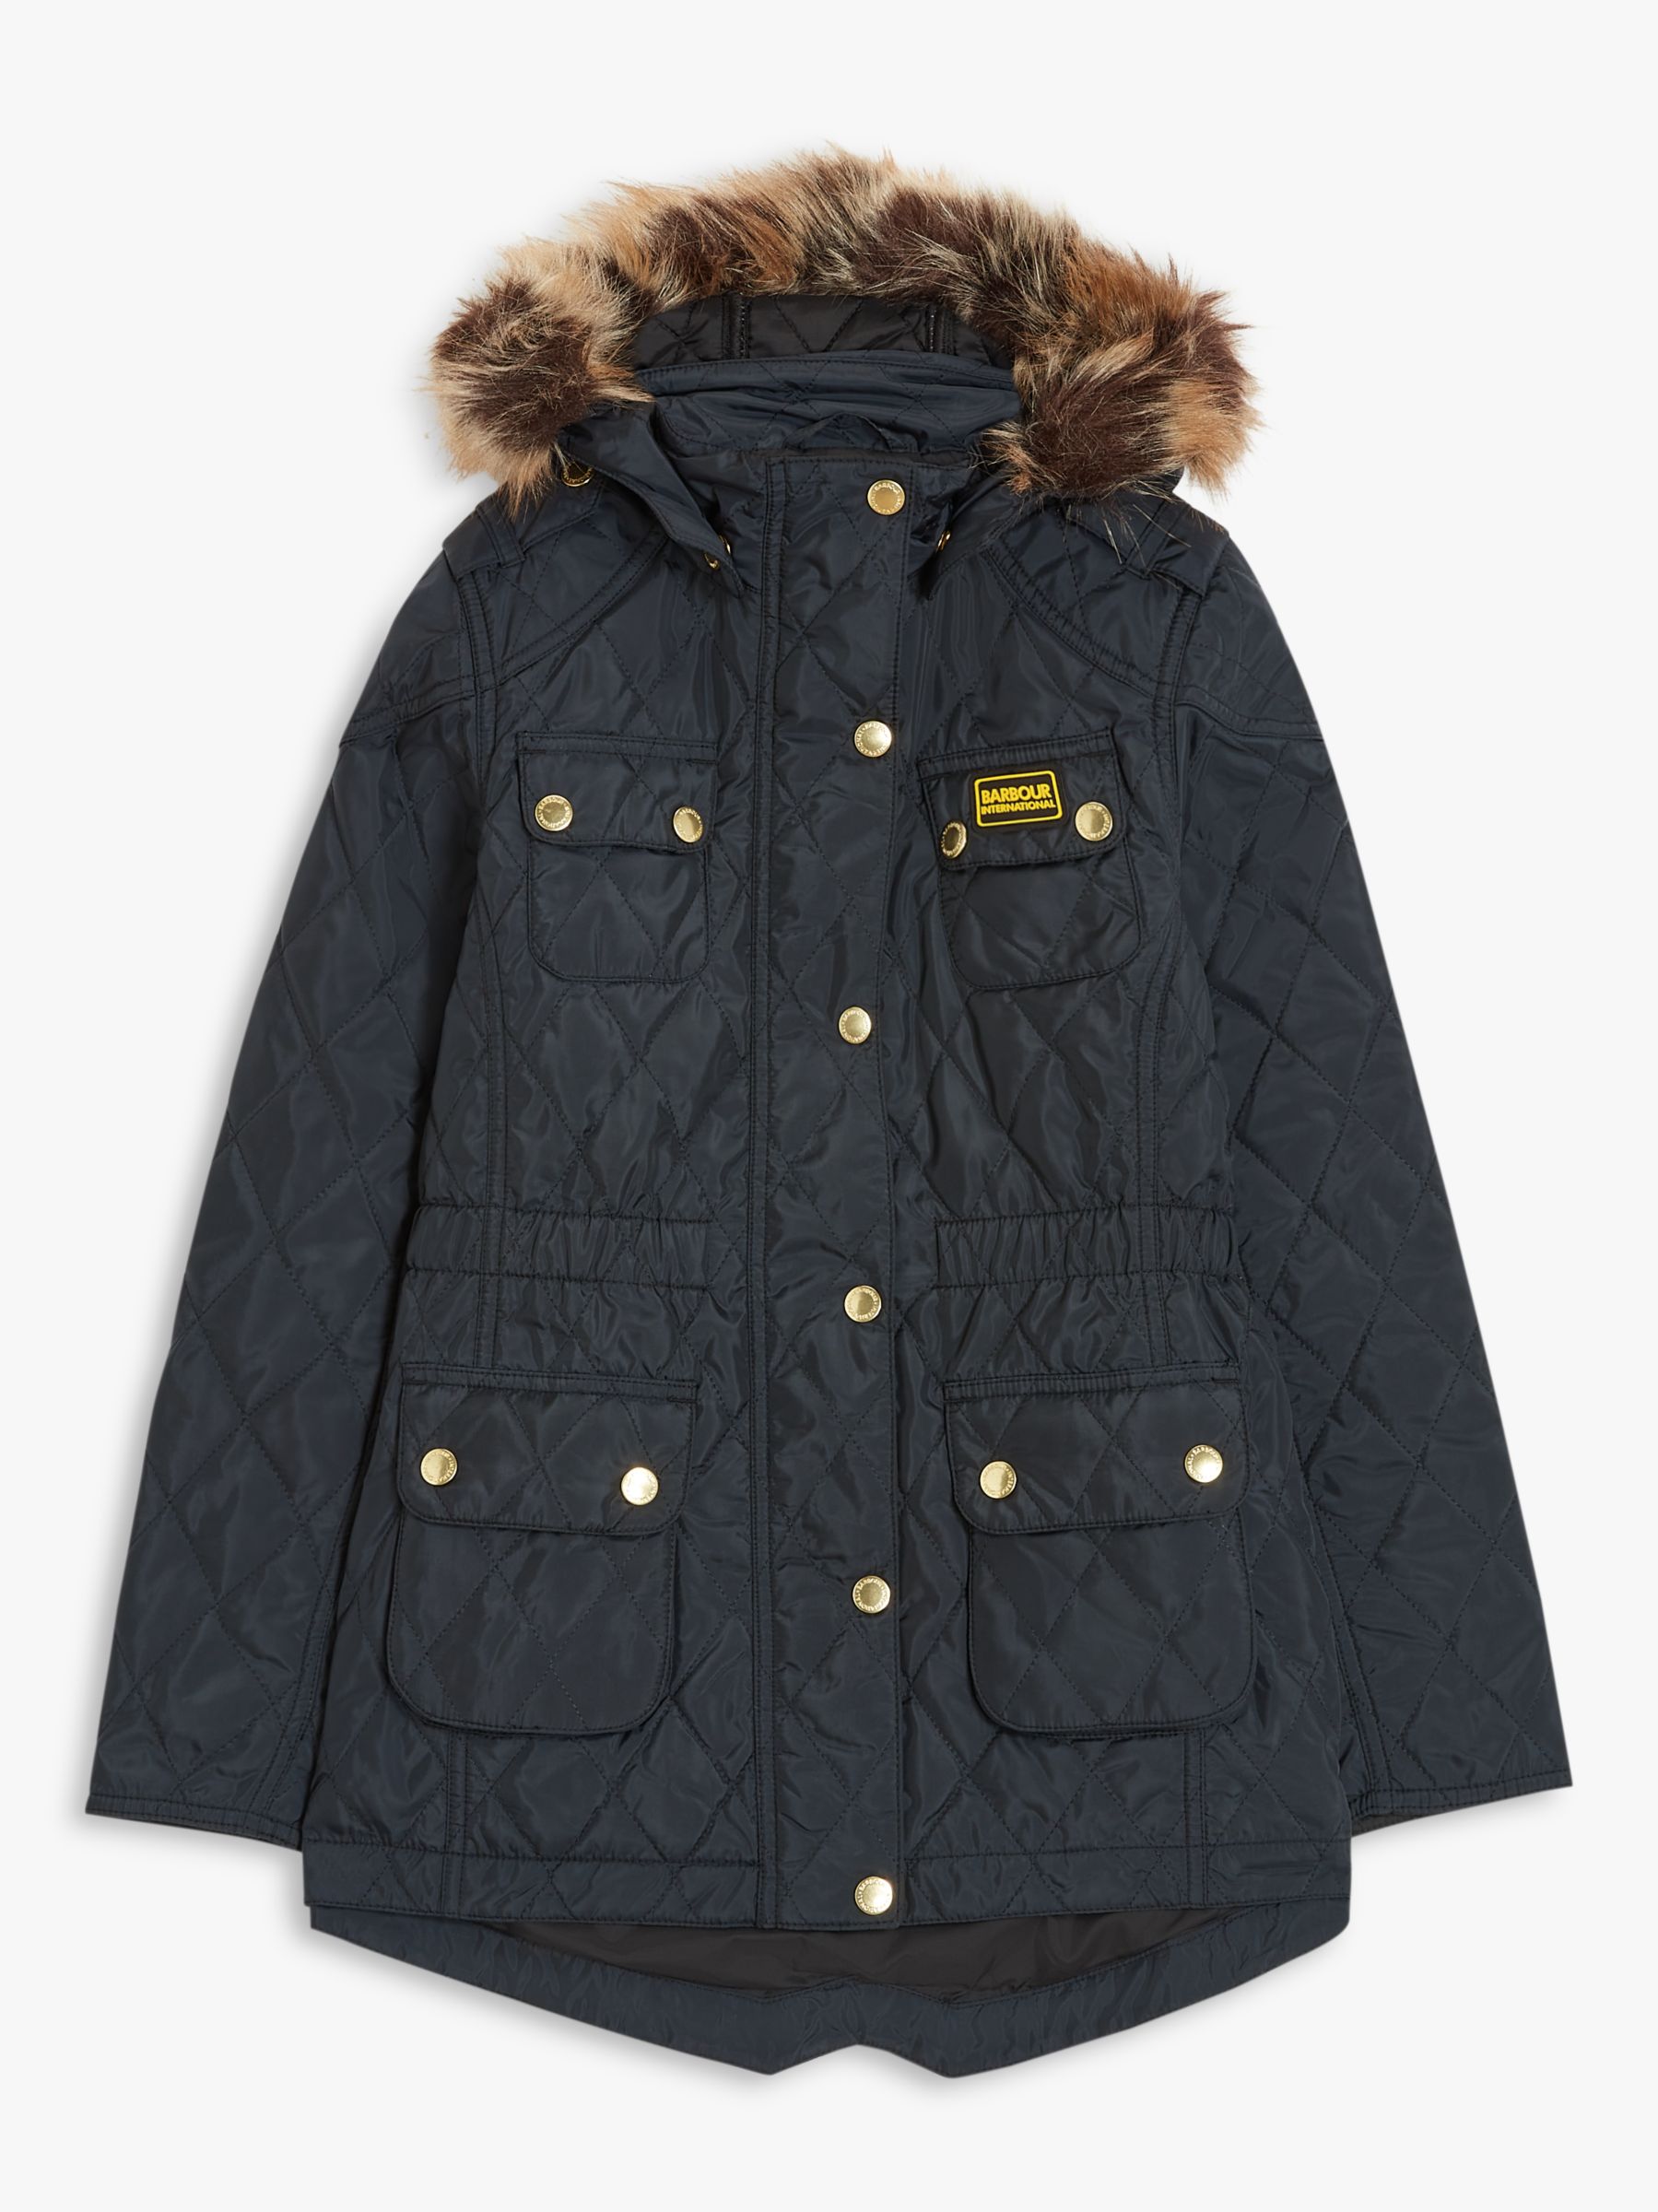 Barbour International Kids' Enduro Quilted Jacket, Black XL unisex 100% polyester